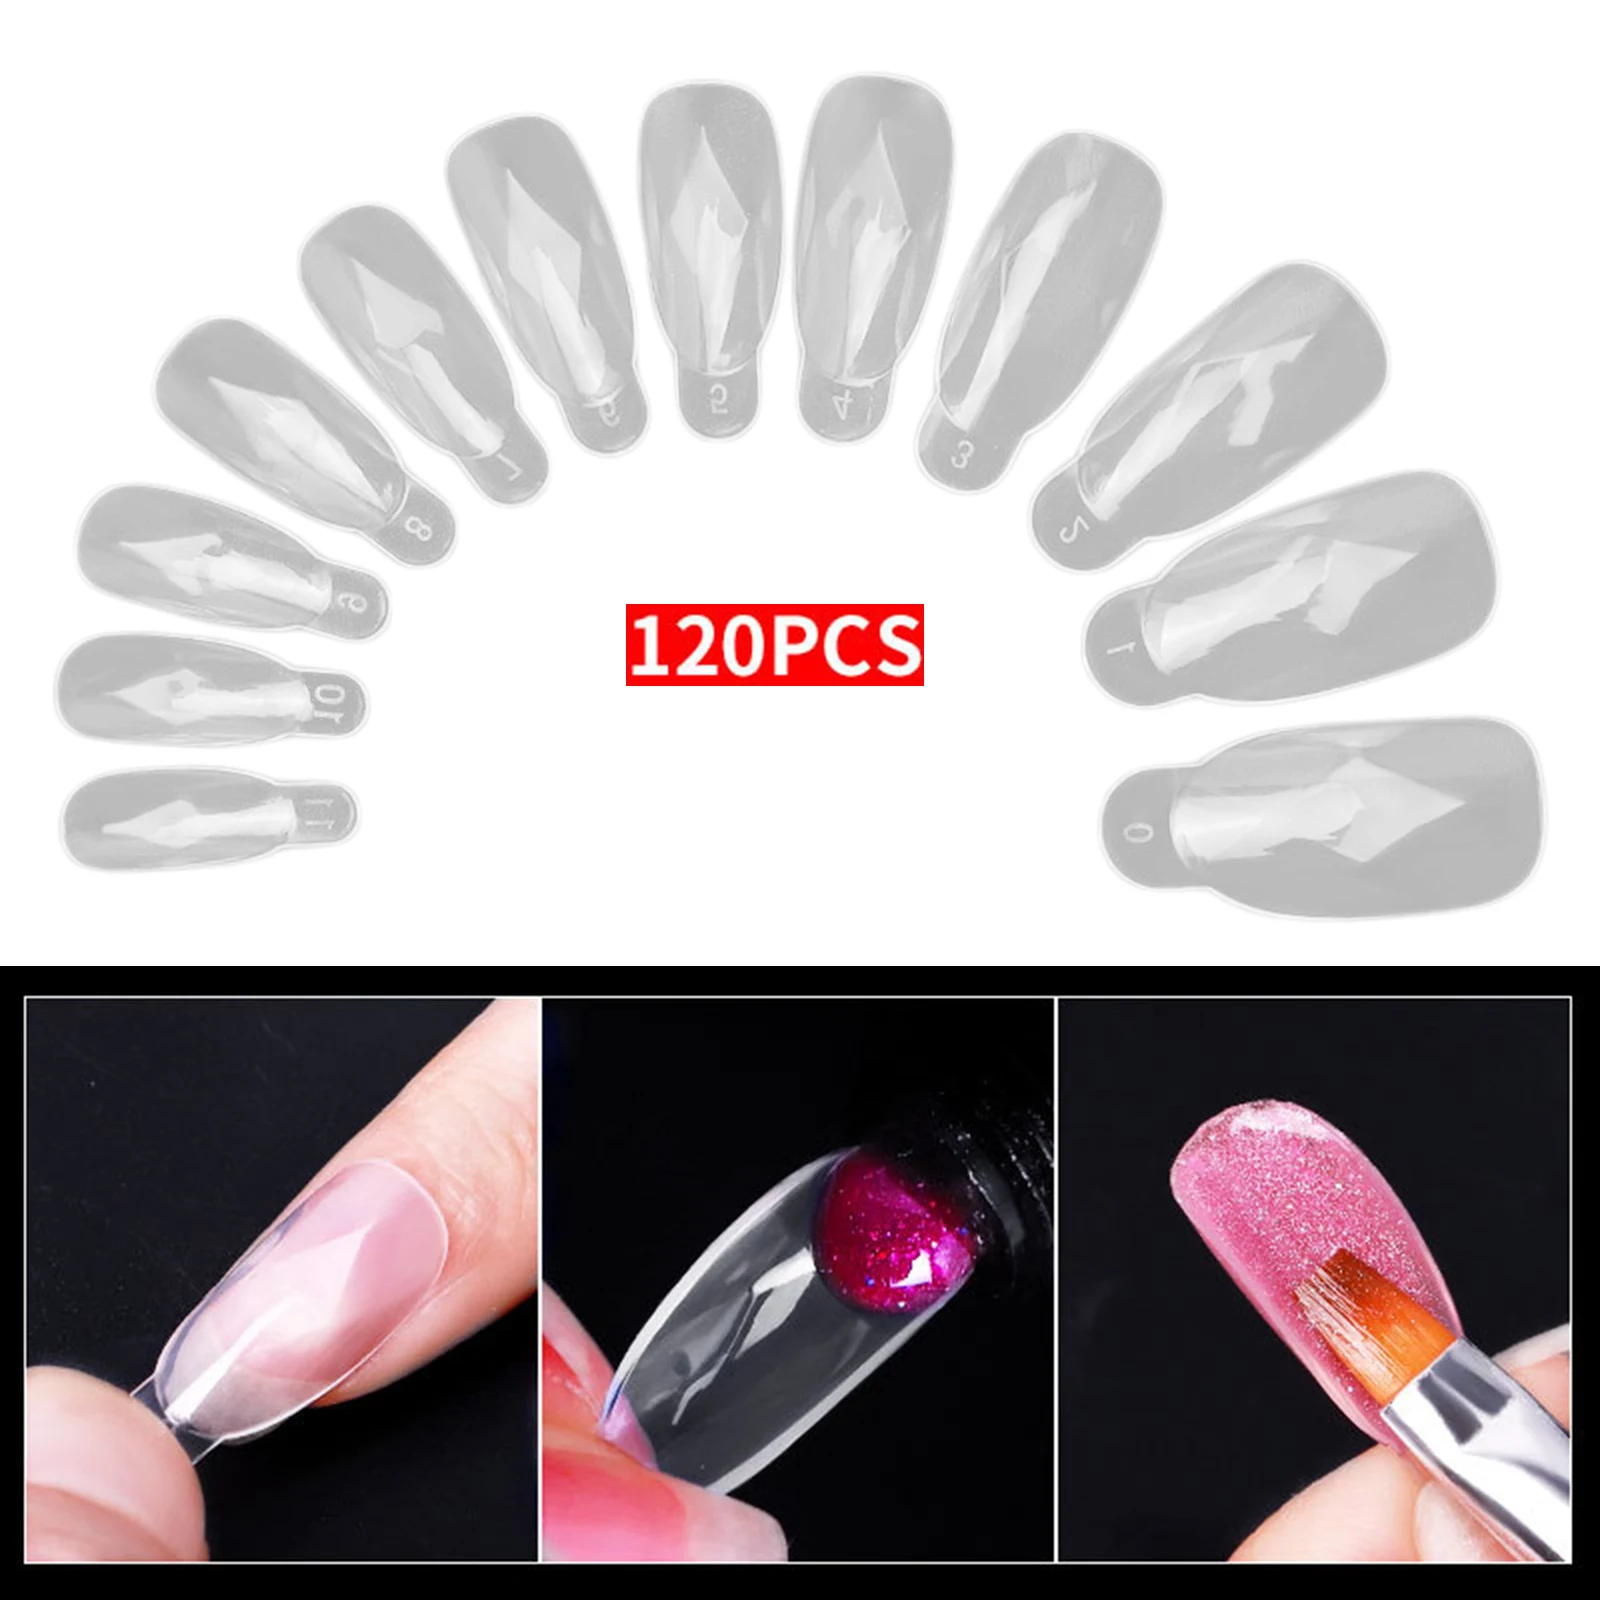 120pcs Fingernail Tips Diamond Shape Manicure ABS Nail Art Mold For Home Use